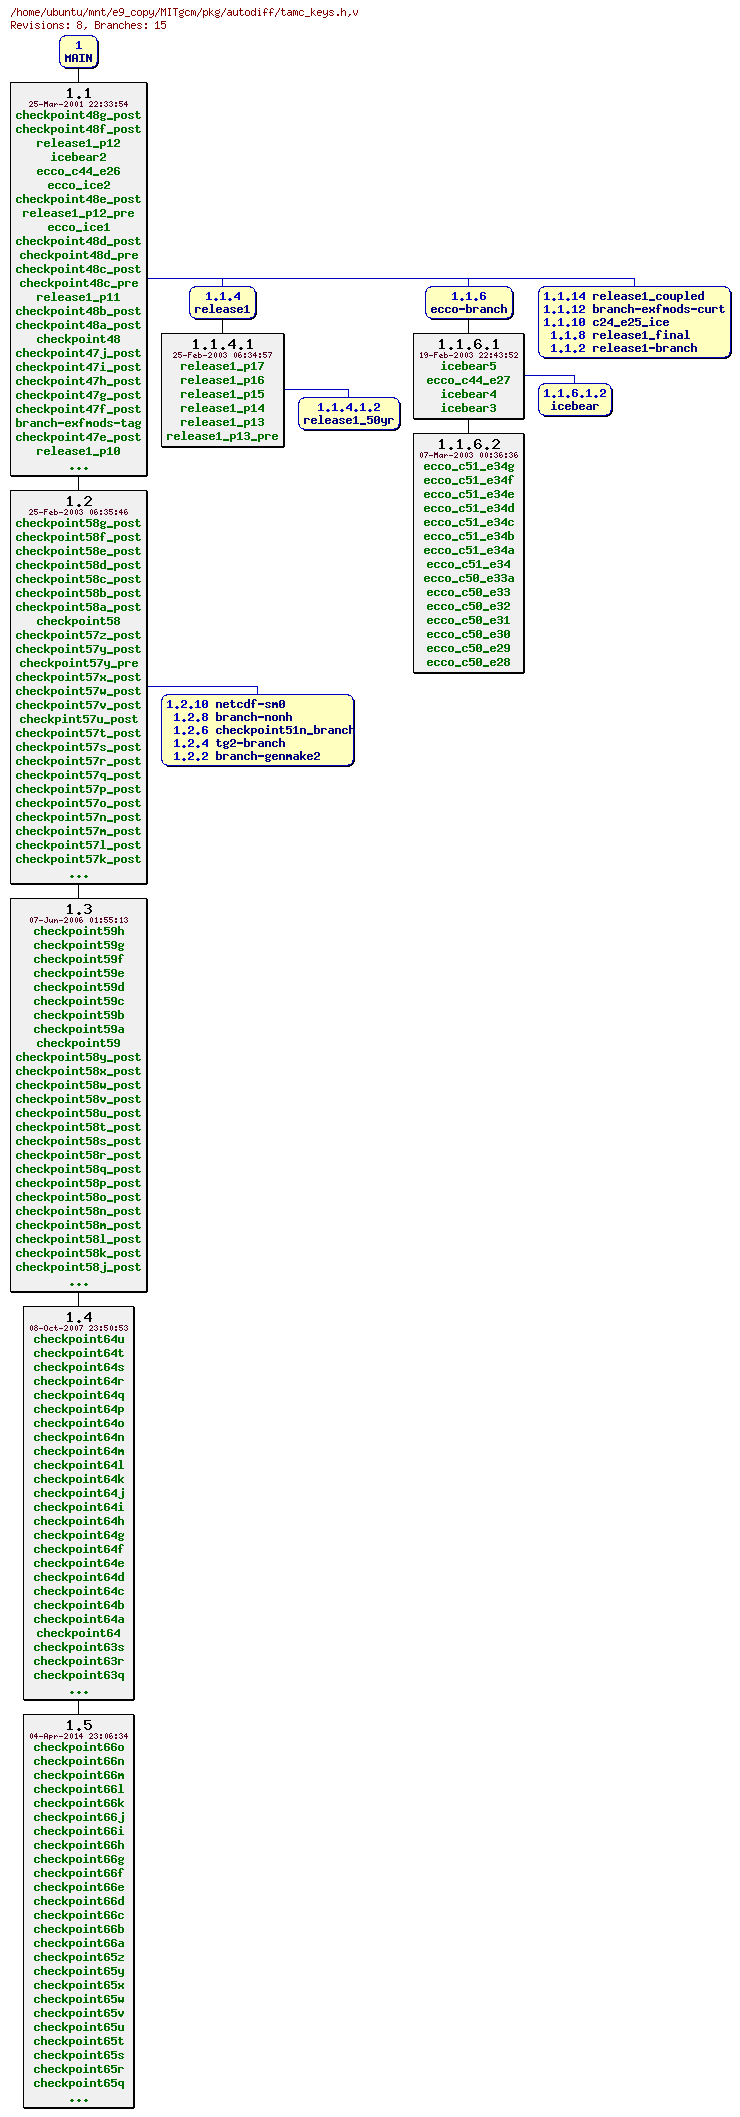 Revisions of MITgcm/pkg/autodiff/tamc_keys.h